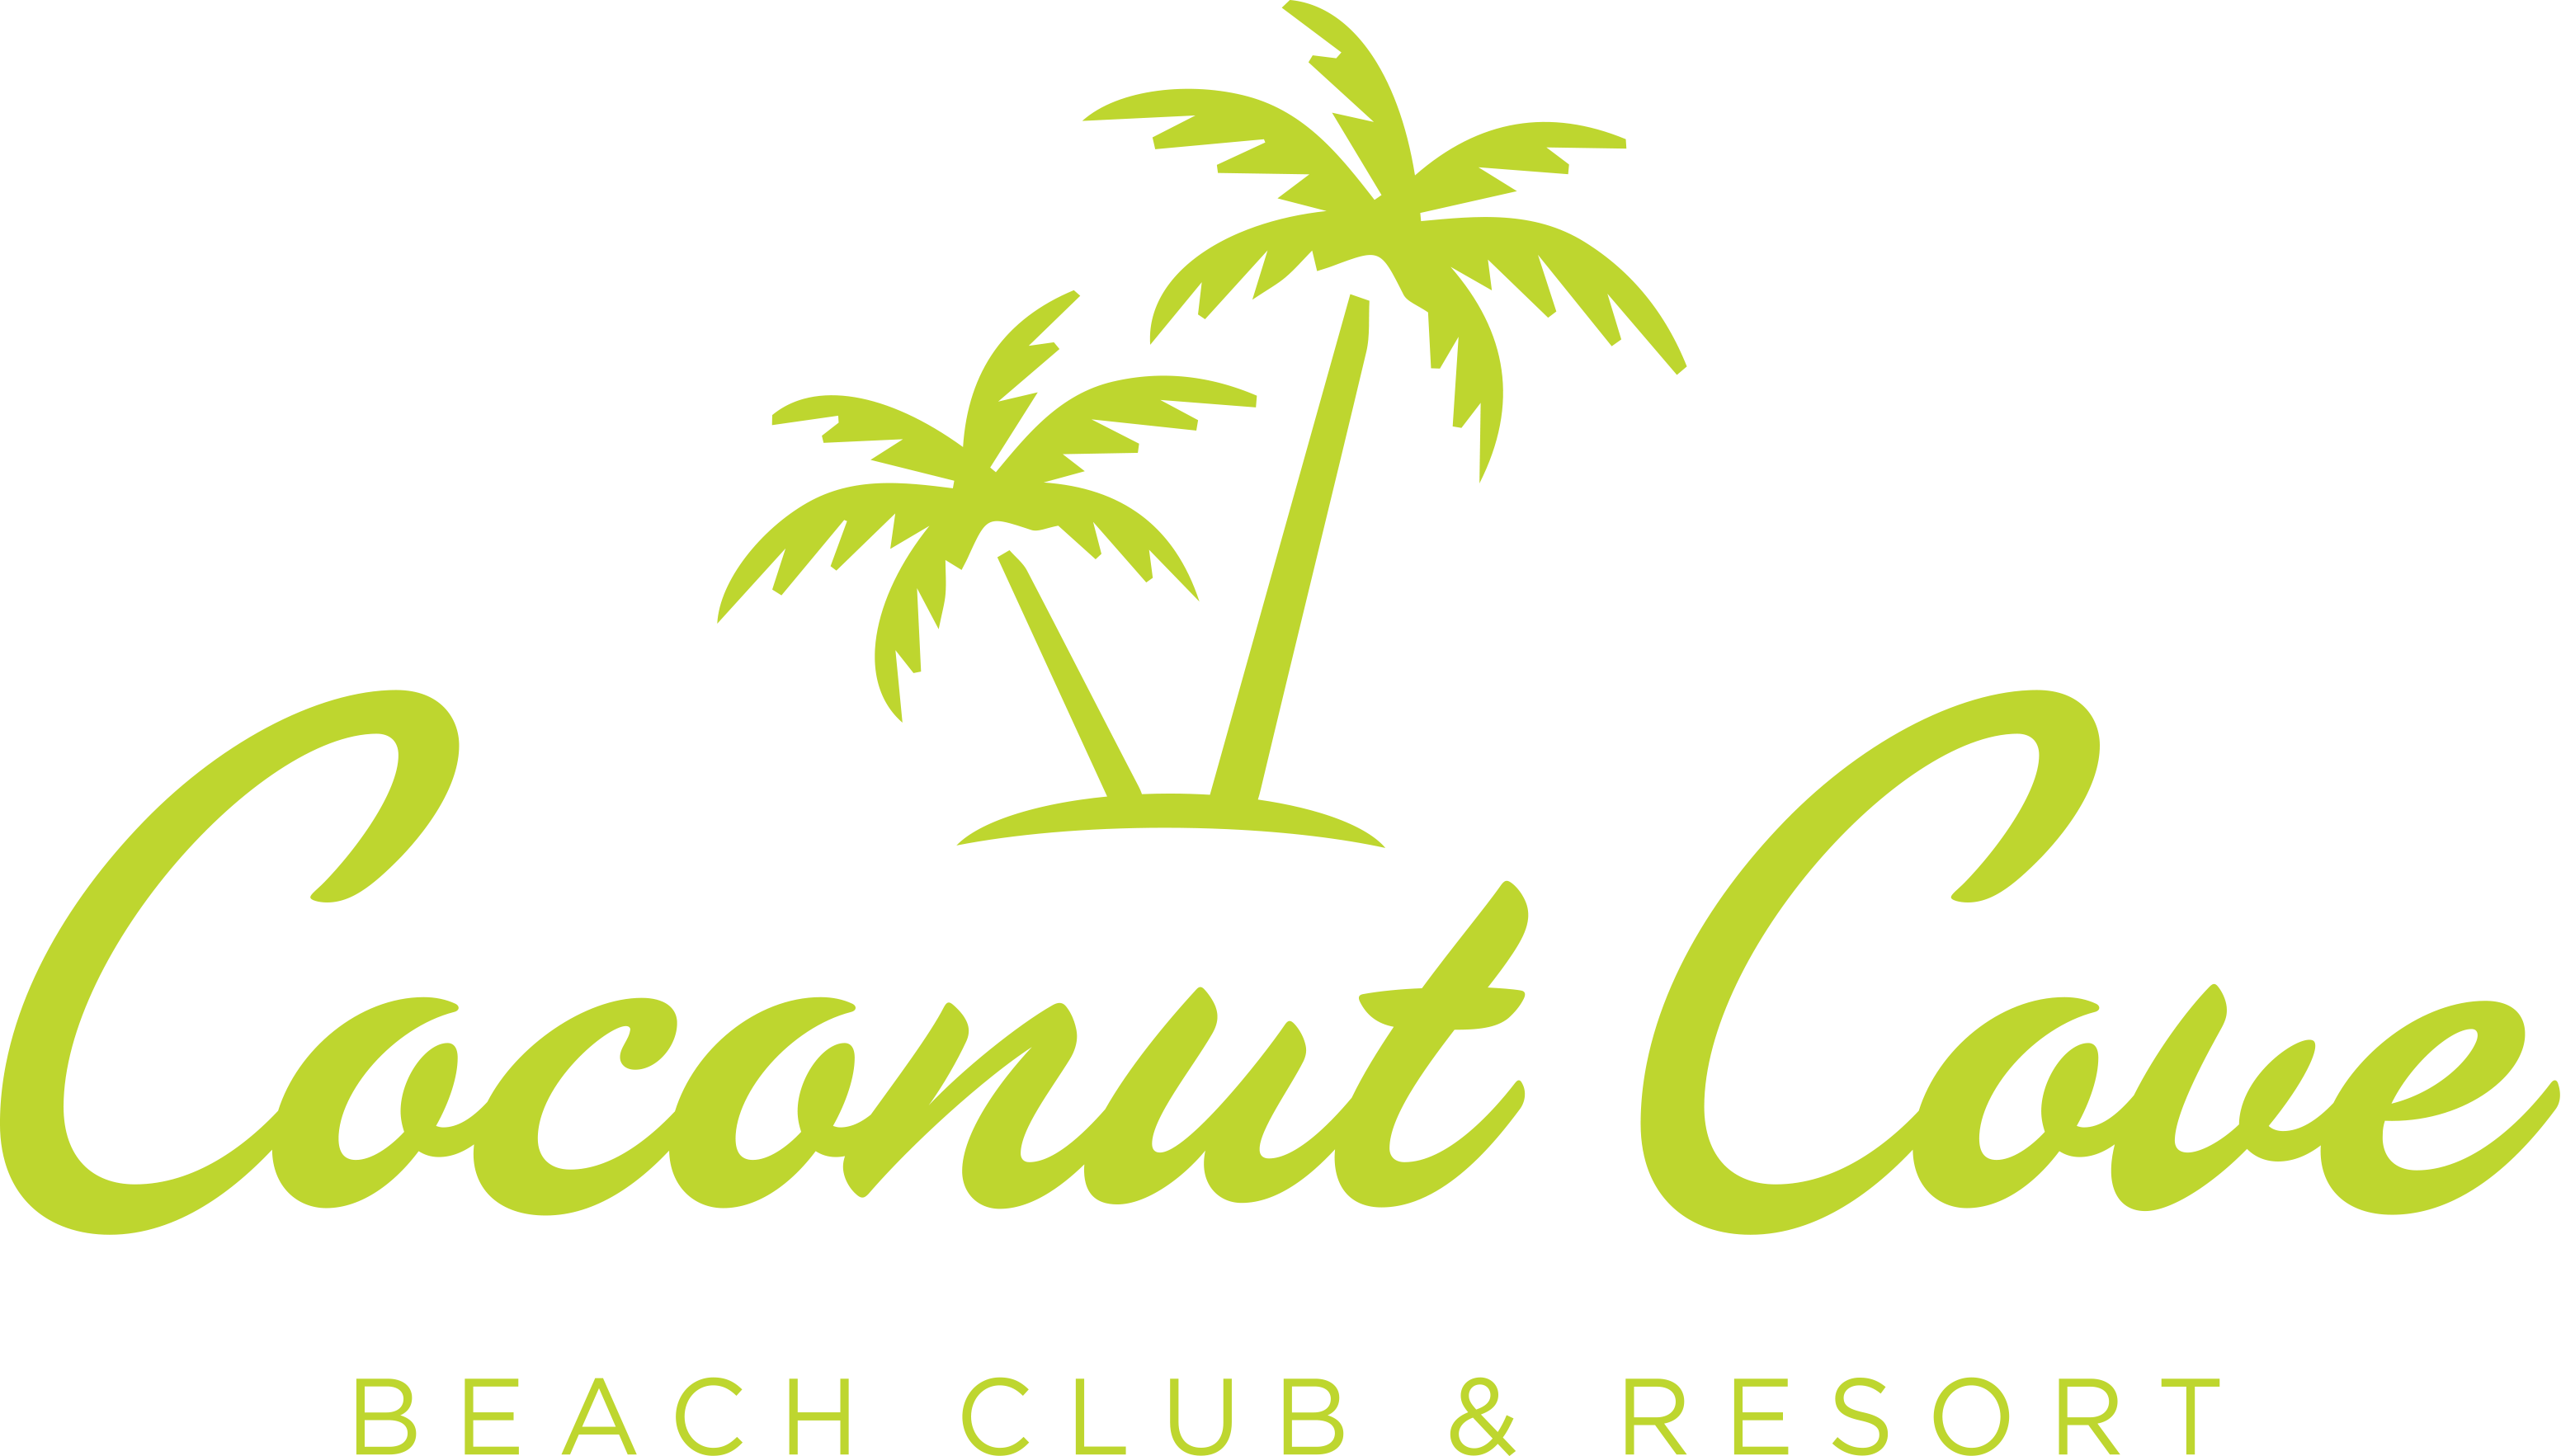 Coconut clipart tiki. Poolside bar cove resort